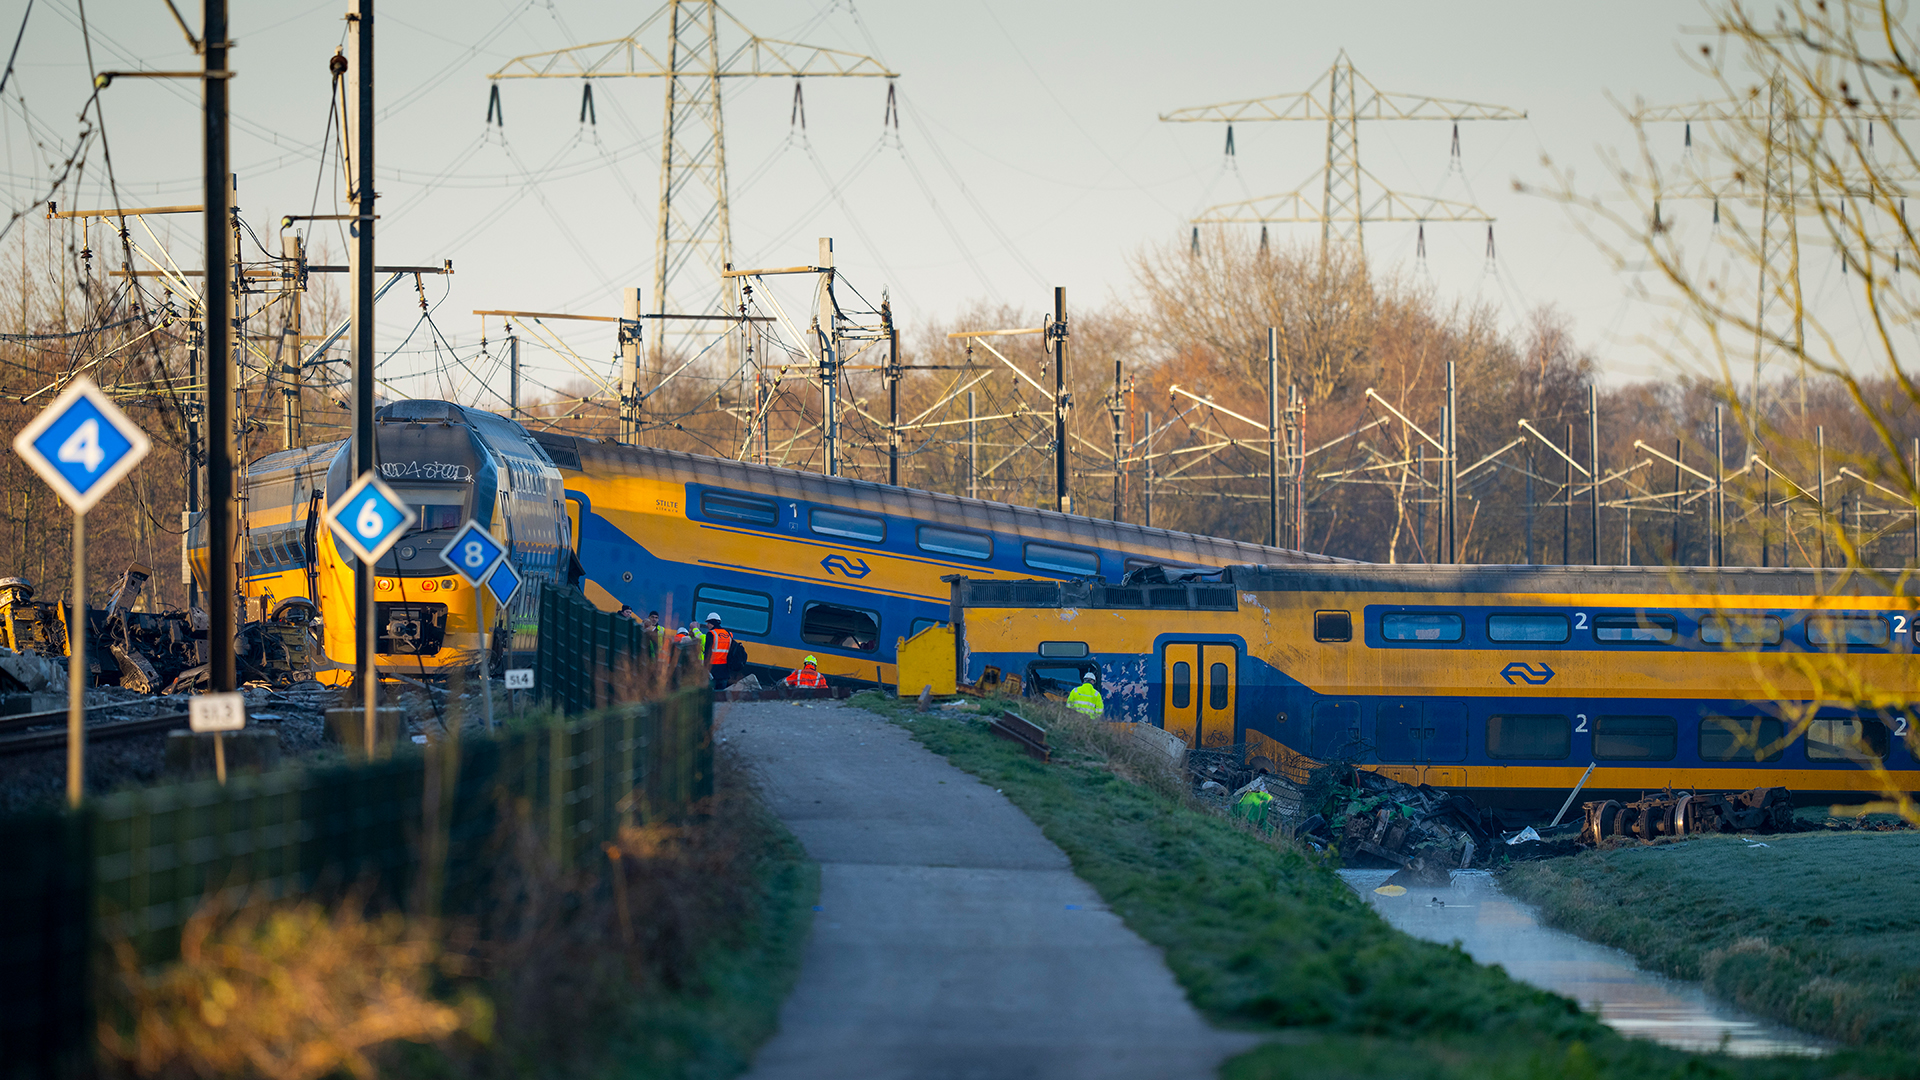 Satu tewas dan beberapa terluka: kecelakaan kereta api yang serius di Belanda